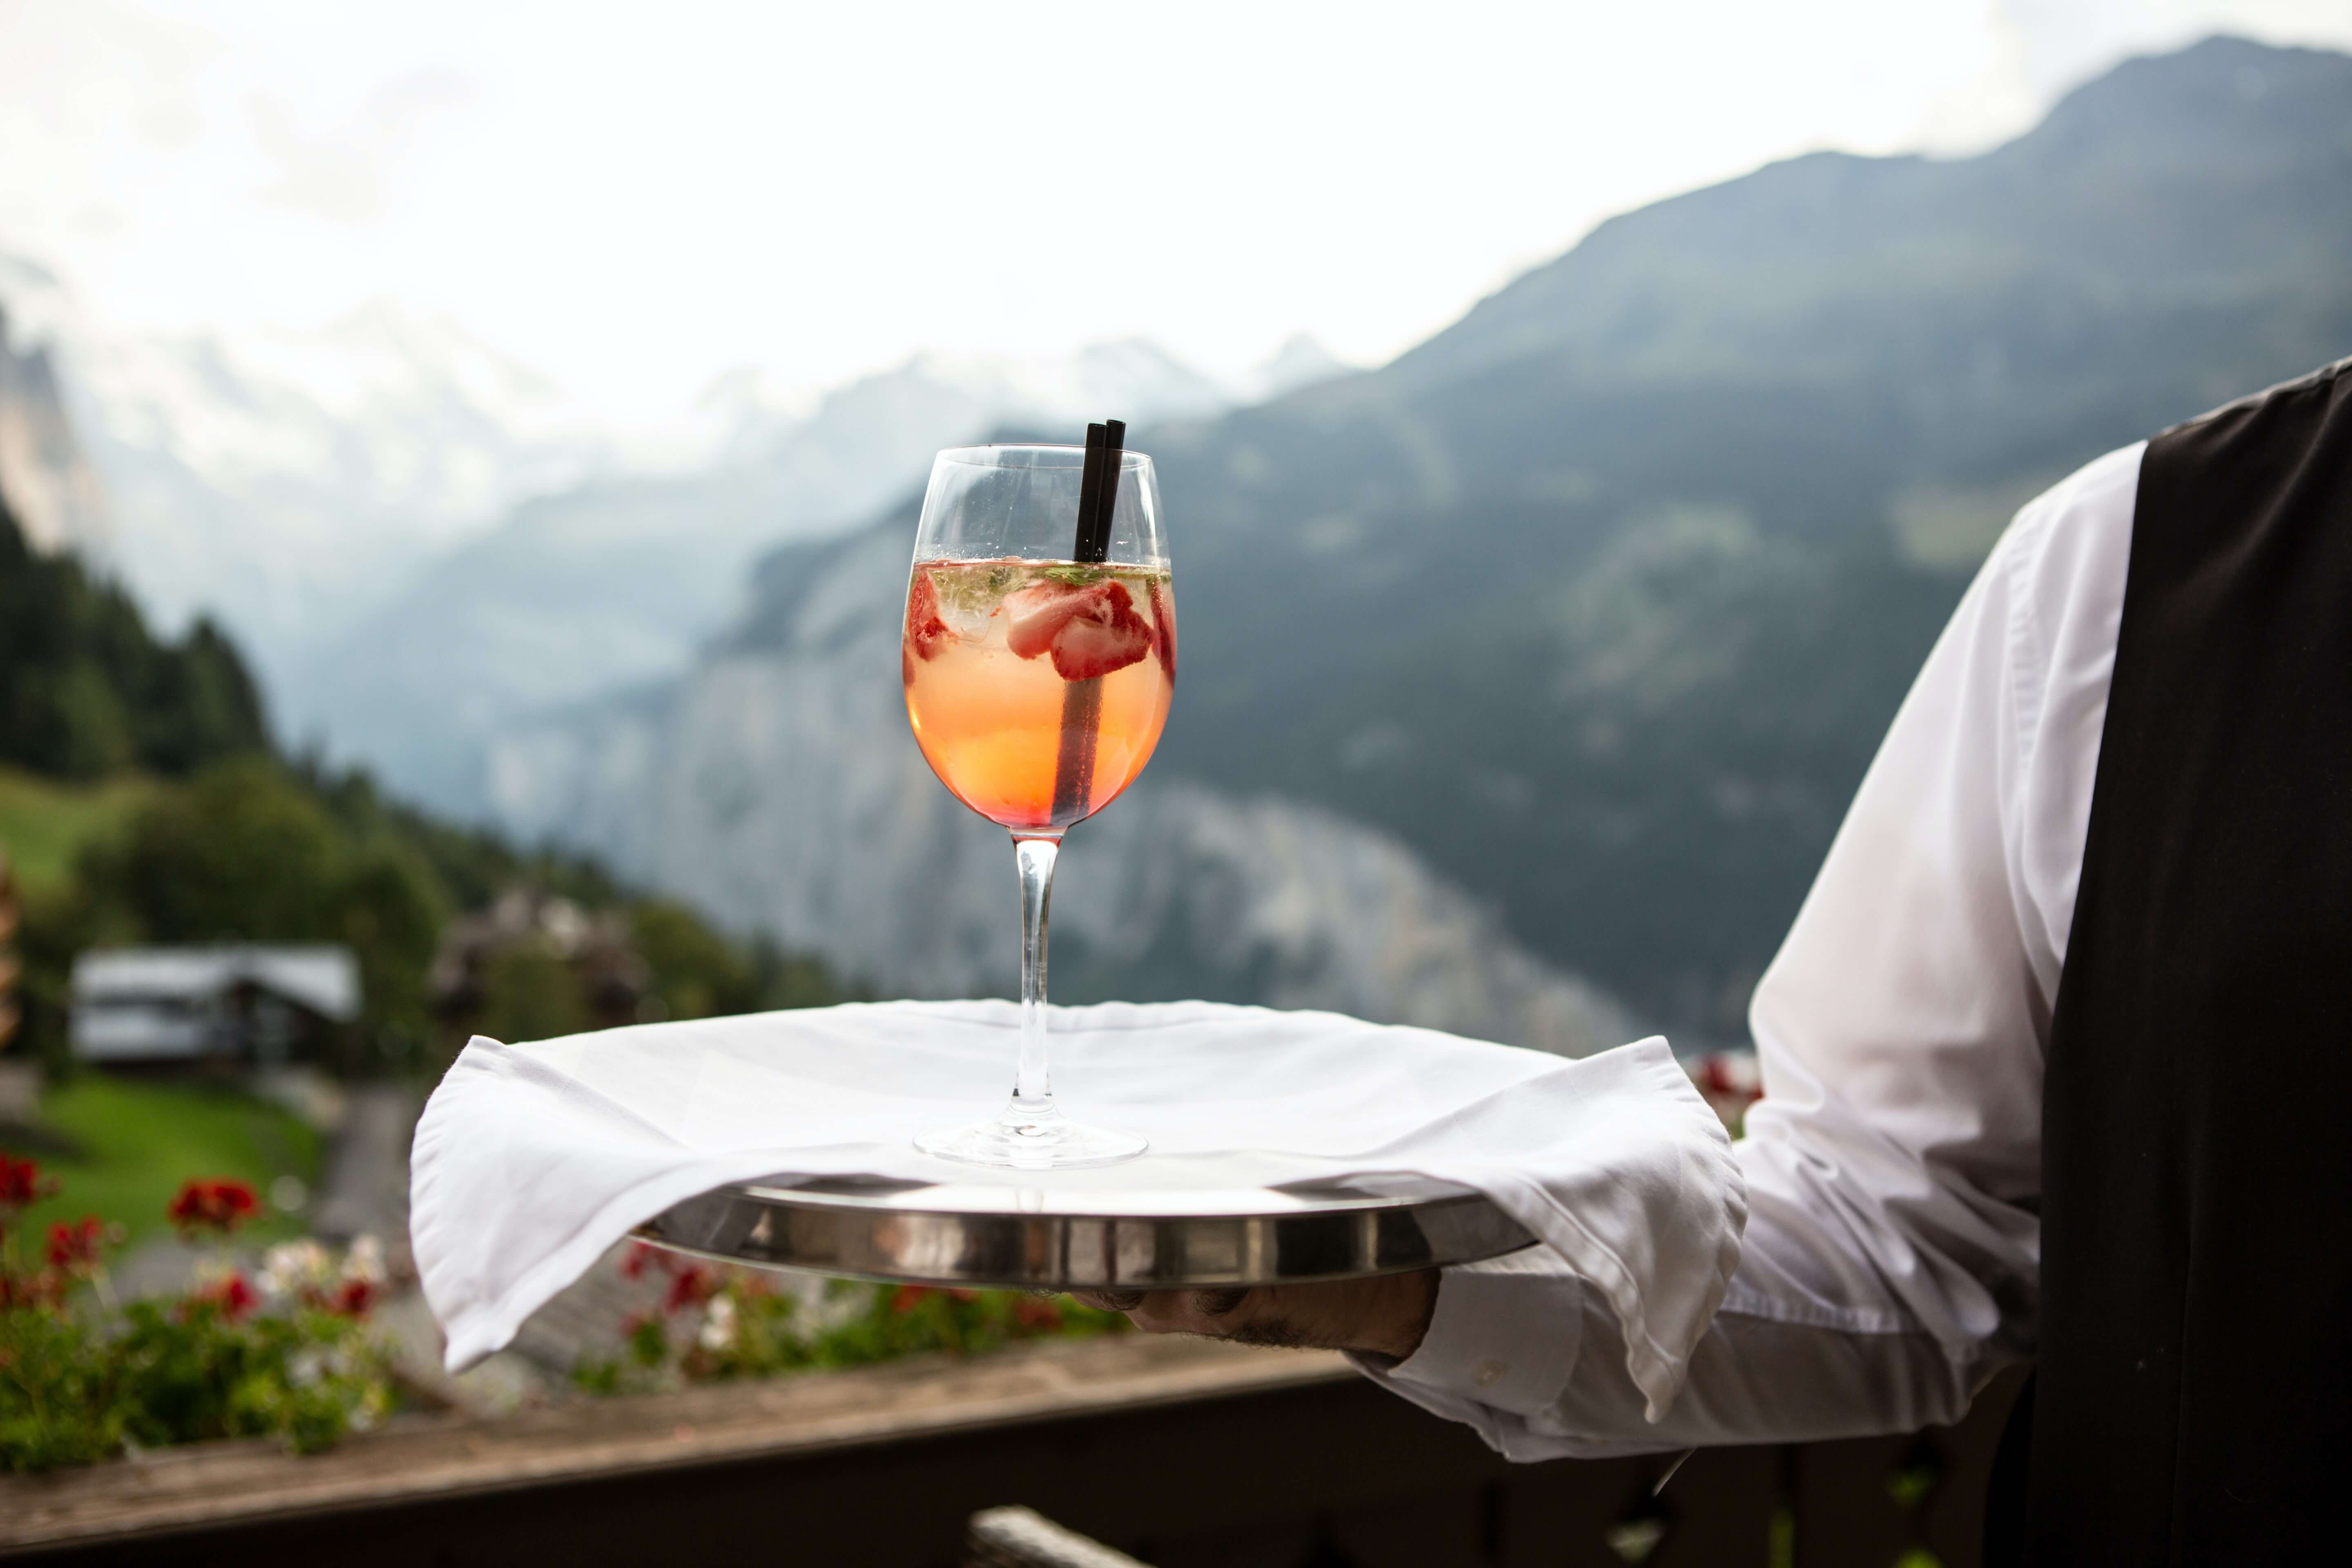 A waiter serving a glass of wine on a platter